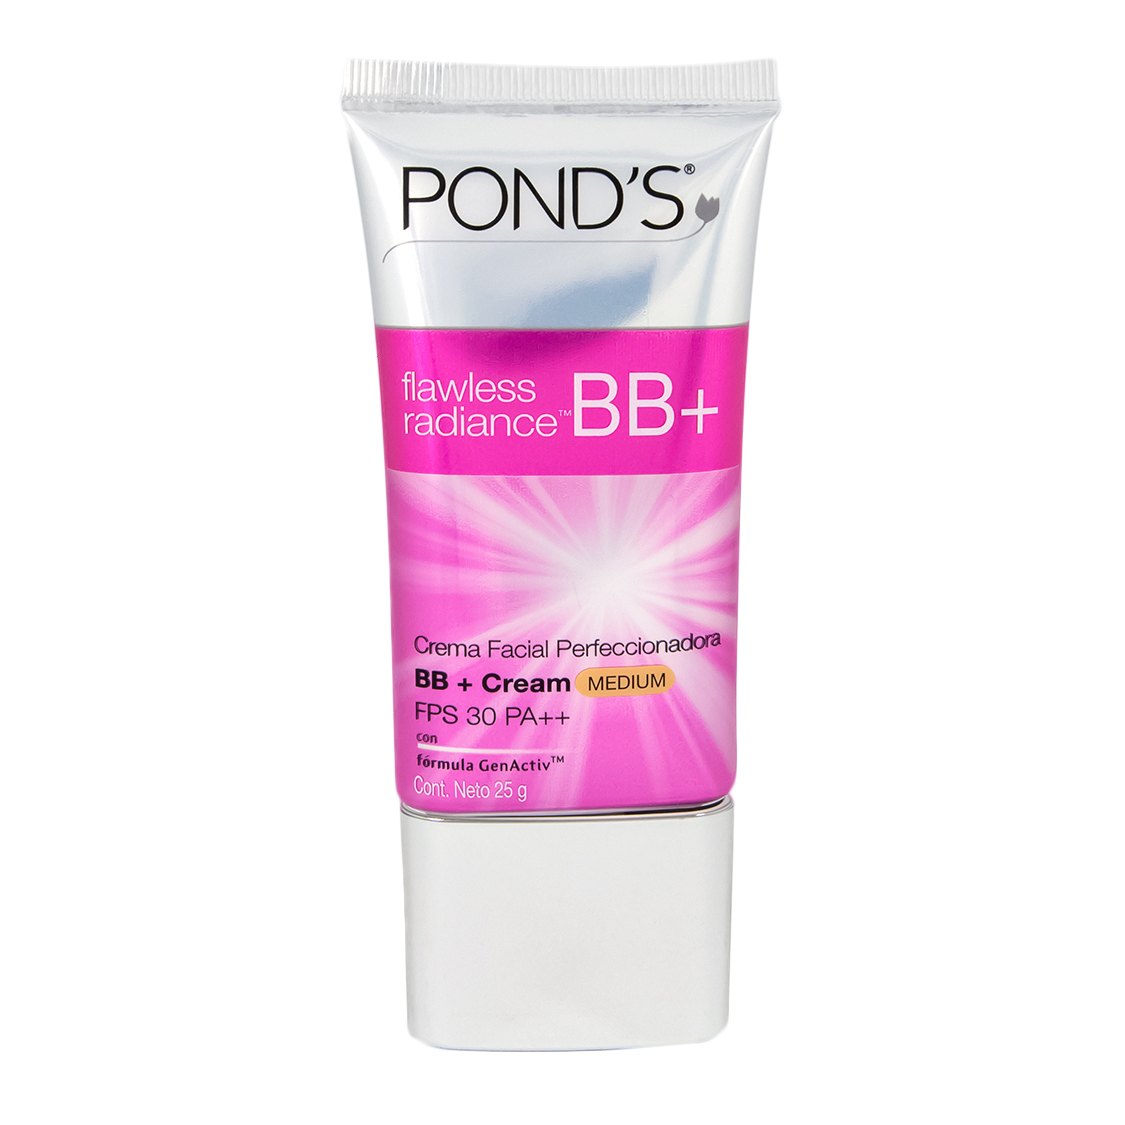 Pond's Flawless Radiance BB Cream